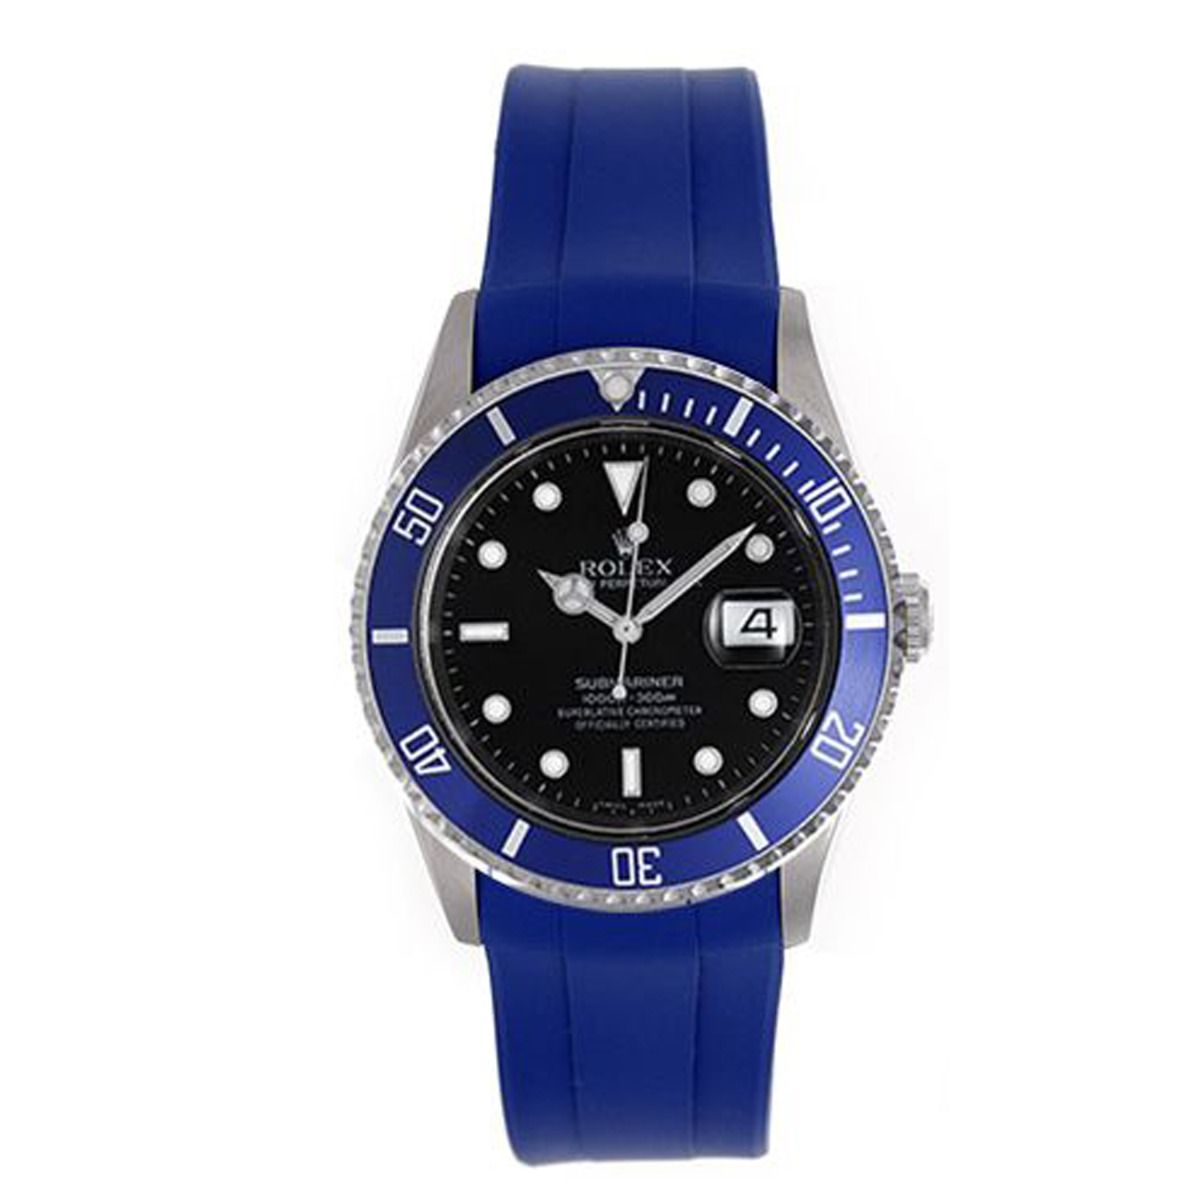 Rolex Submariner Sport Diving Watch Blue Rubber Band